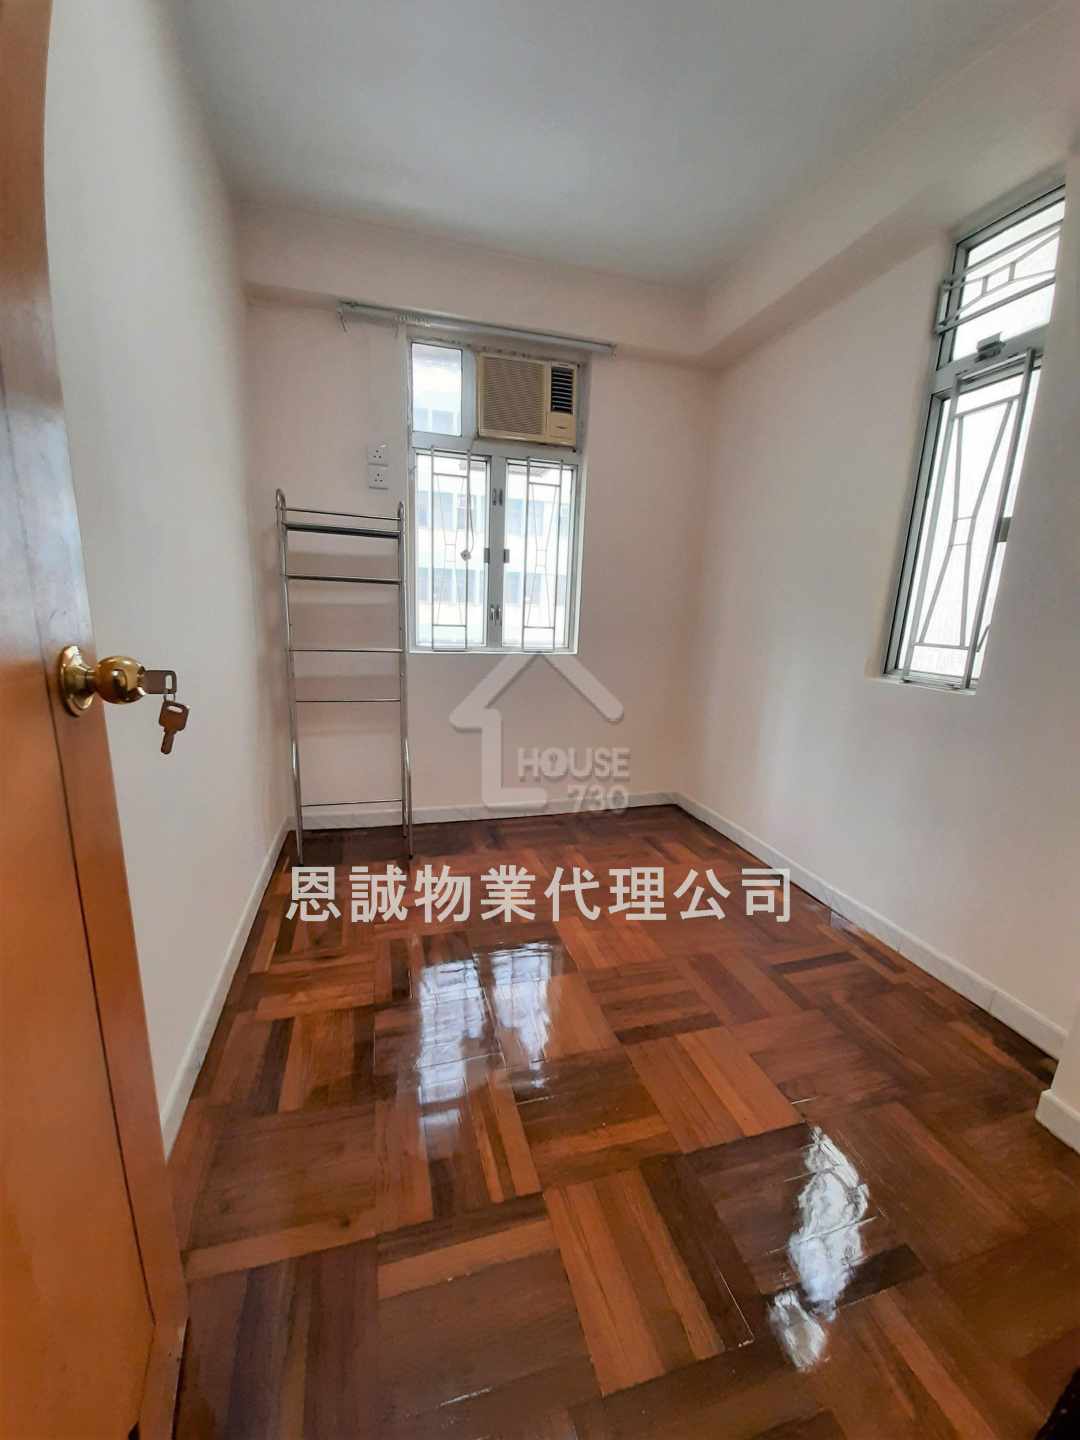 Single Building (Yuen Long District) 元朗洋樓 Lower Floor Bedroom 1 House730-6863951